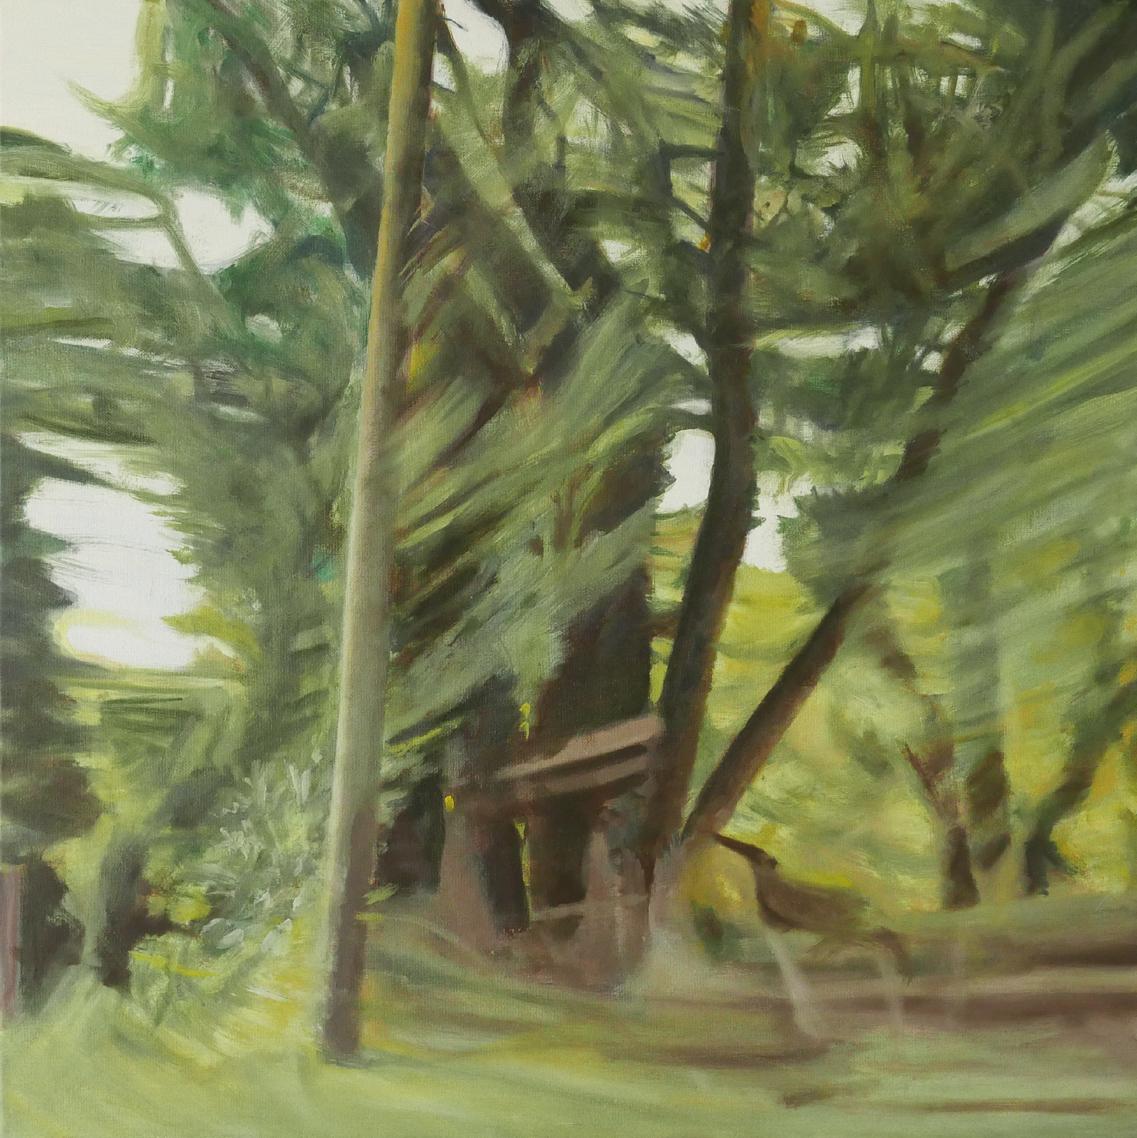 Oil on linen canvas - 64.3 x 64.3 x 3.4 cm